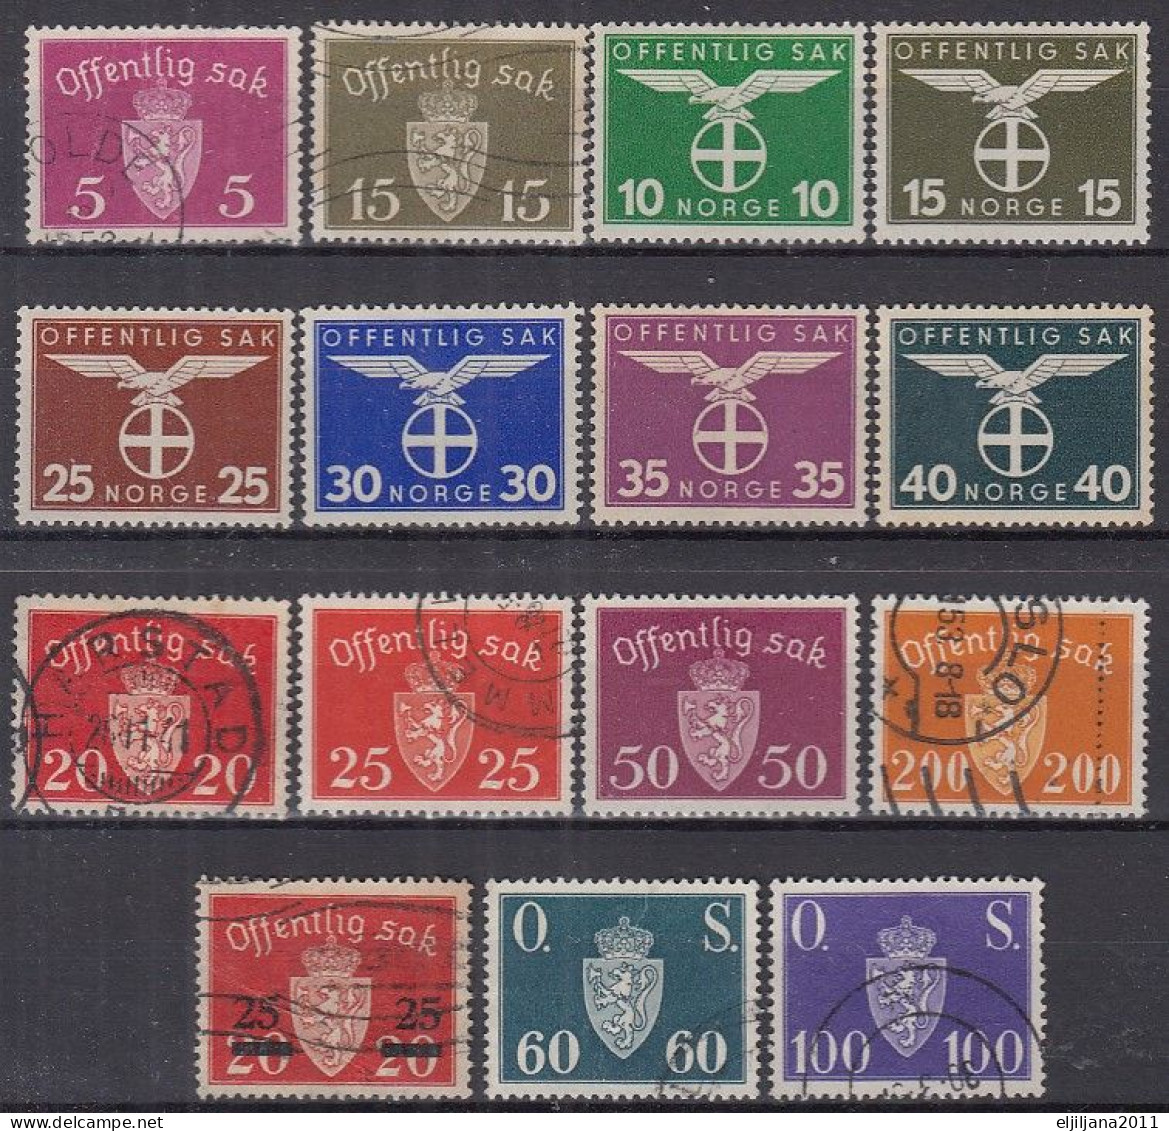 Action !! SALE !! 50 % OFF !! ⁕ Norway / NORGE 1937 - 1952 ⁕ Official Stamps ⁕ 15v MH & Used - Dienstzegels